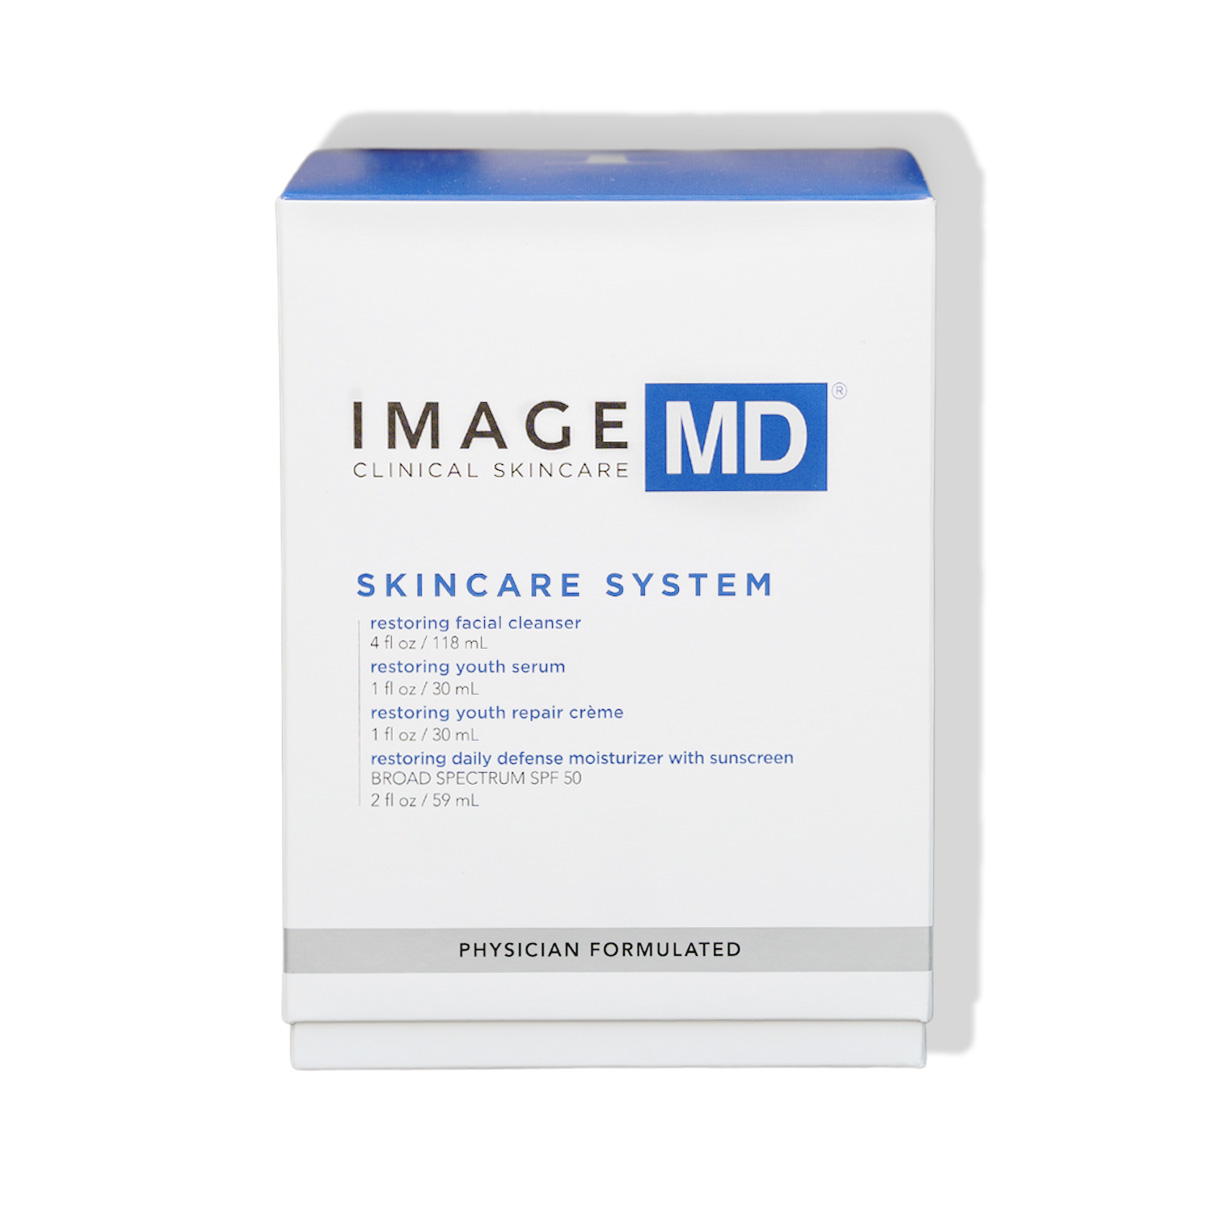 Image MD – Skincare system